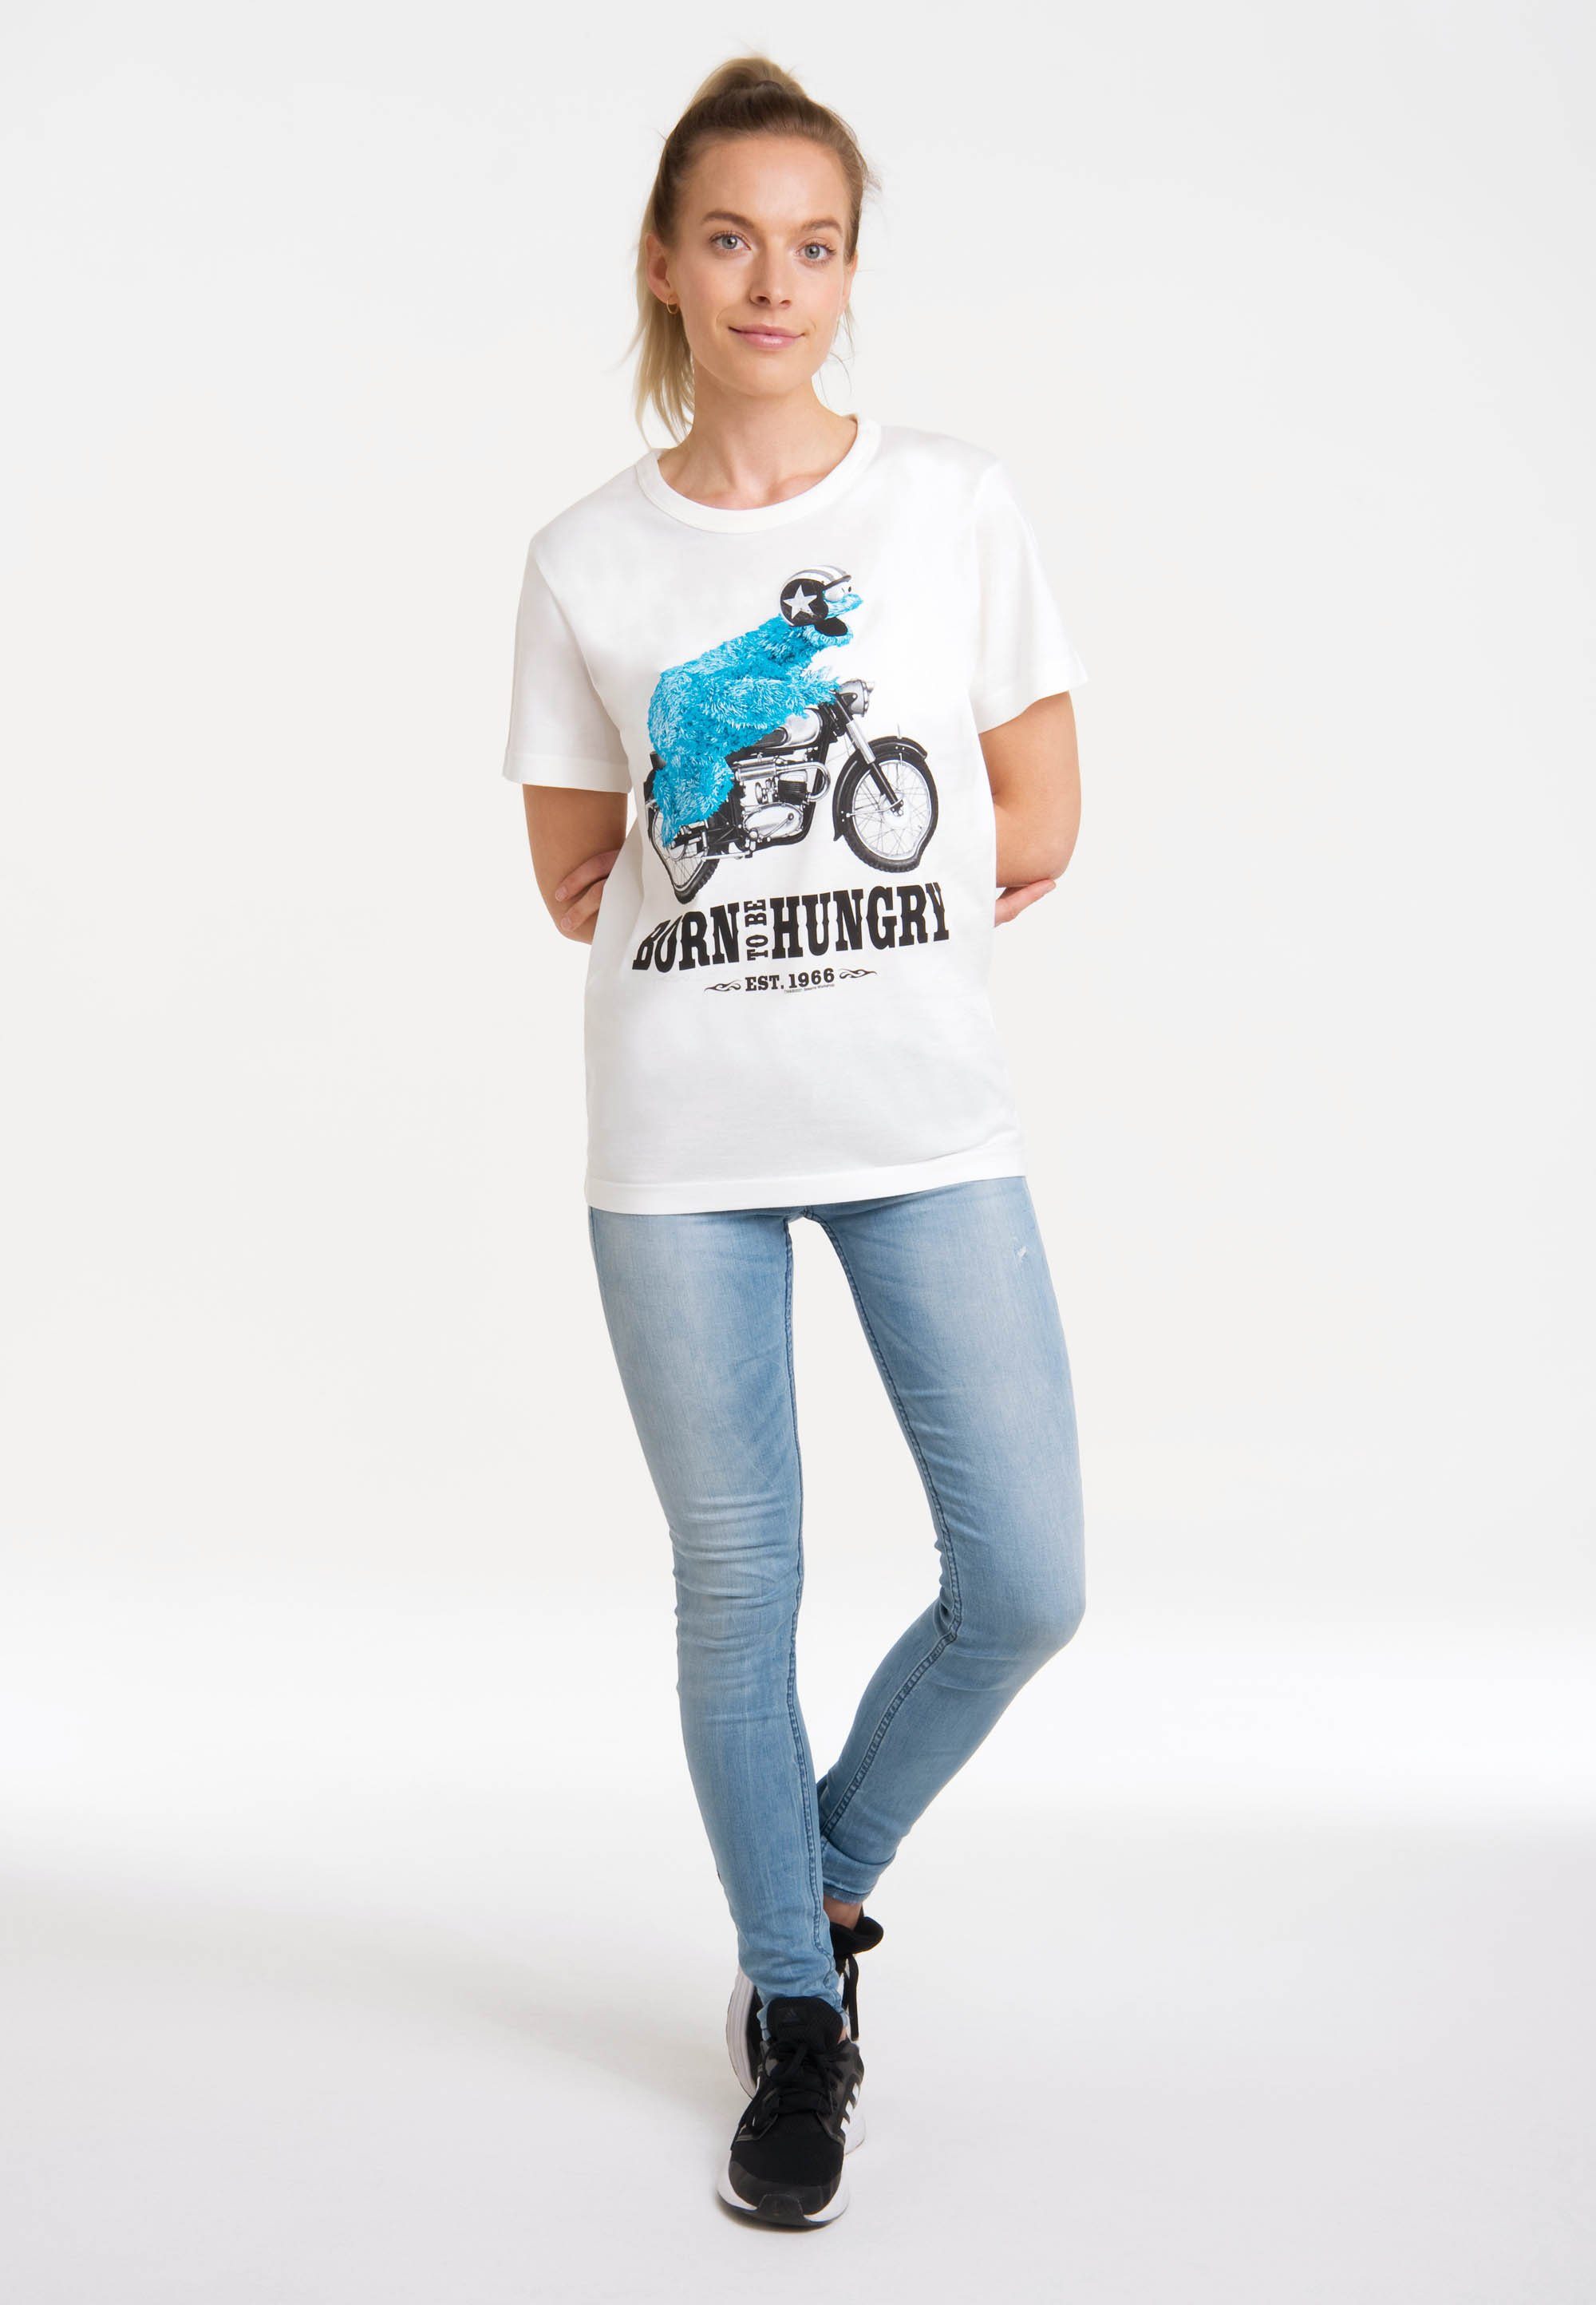 LOGOSHIRT T-Shirt Sesamstrasse - Krümelmonster Motorrad mit lizenziertem  Print, Witziges Krümelmonster-Motiv auf der Front als Highlight | T-Shirts